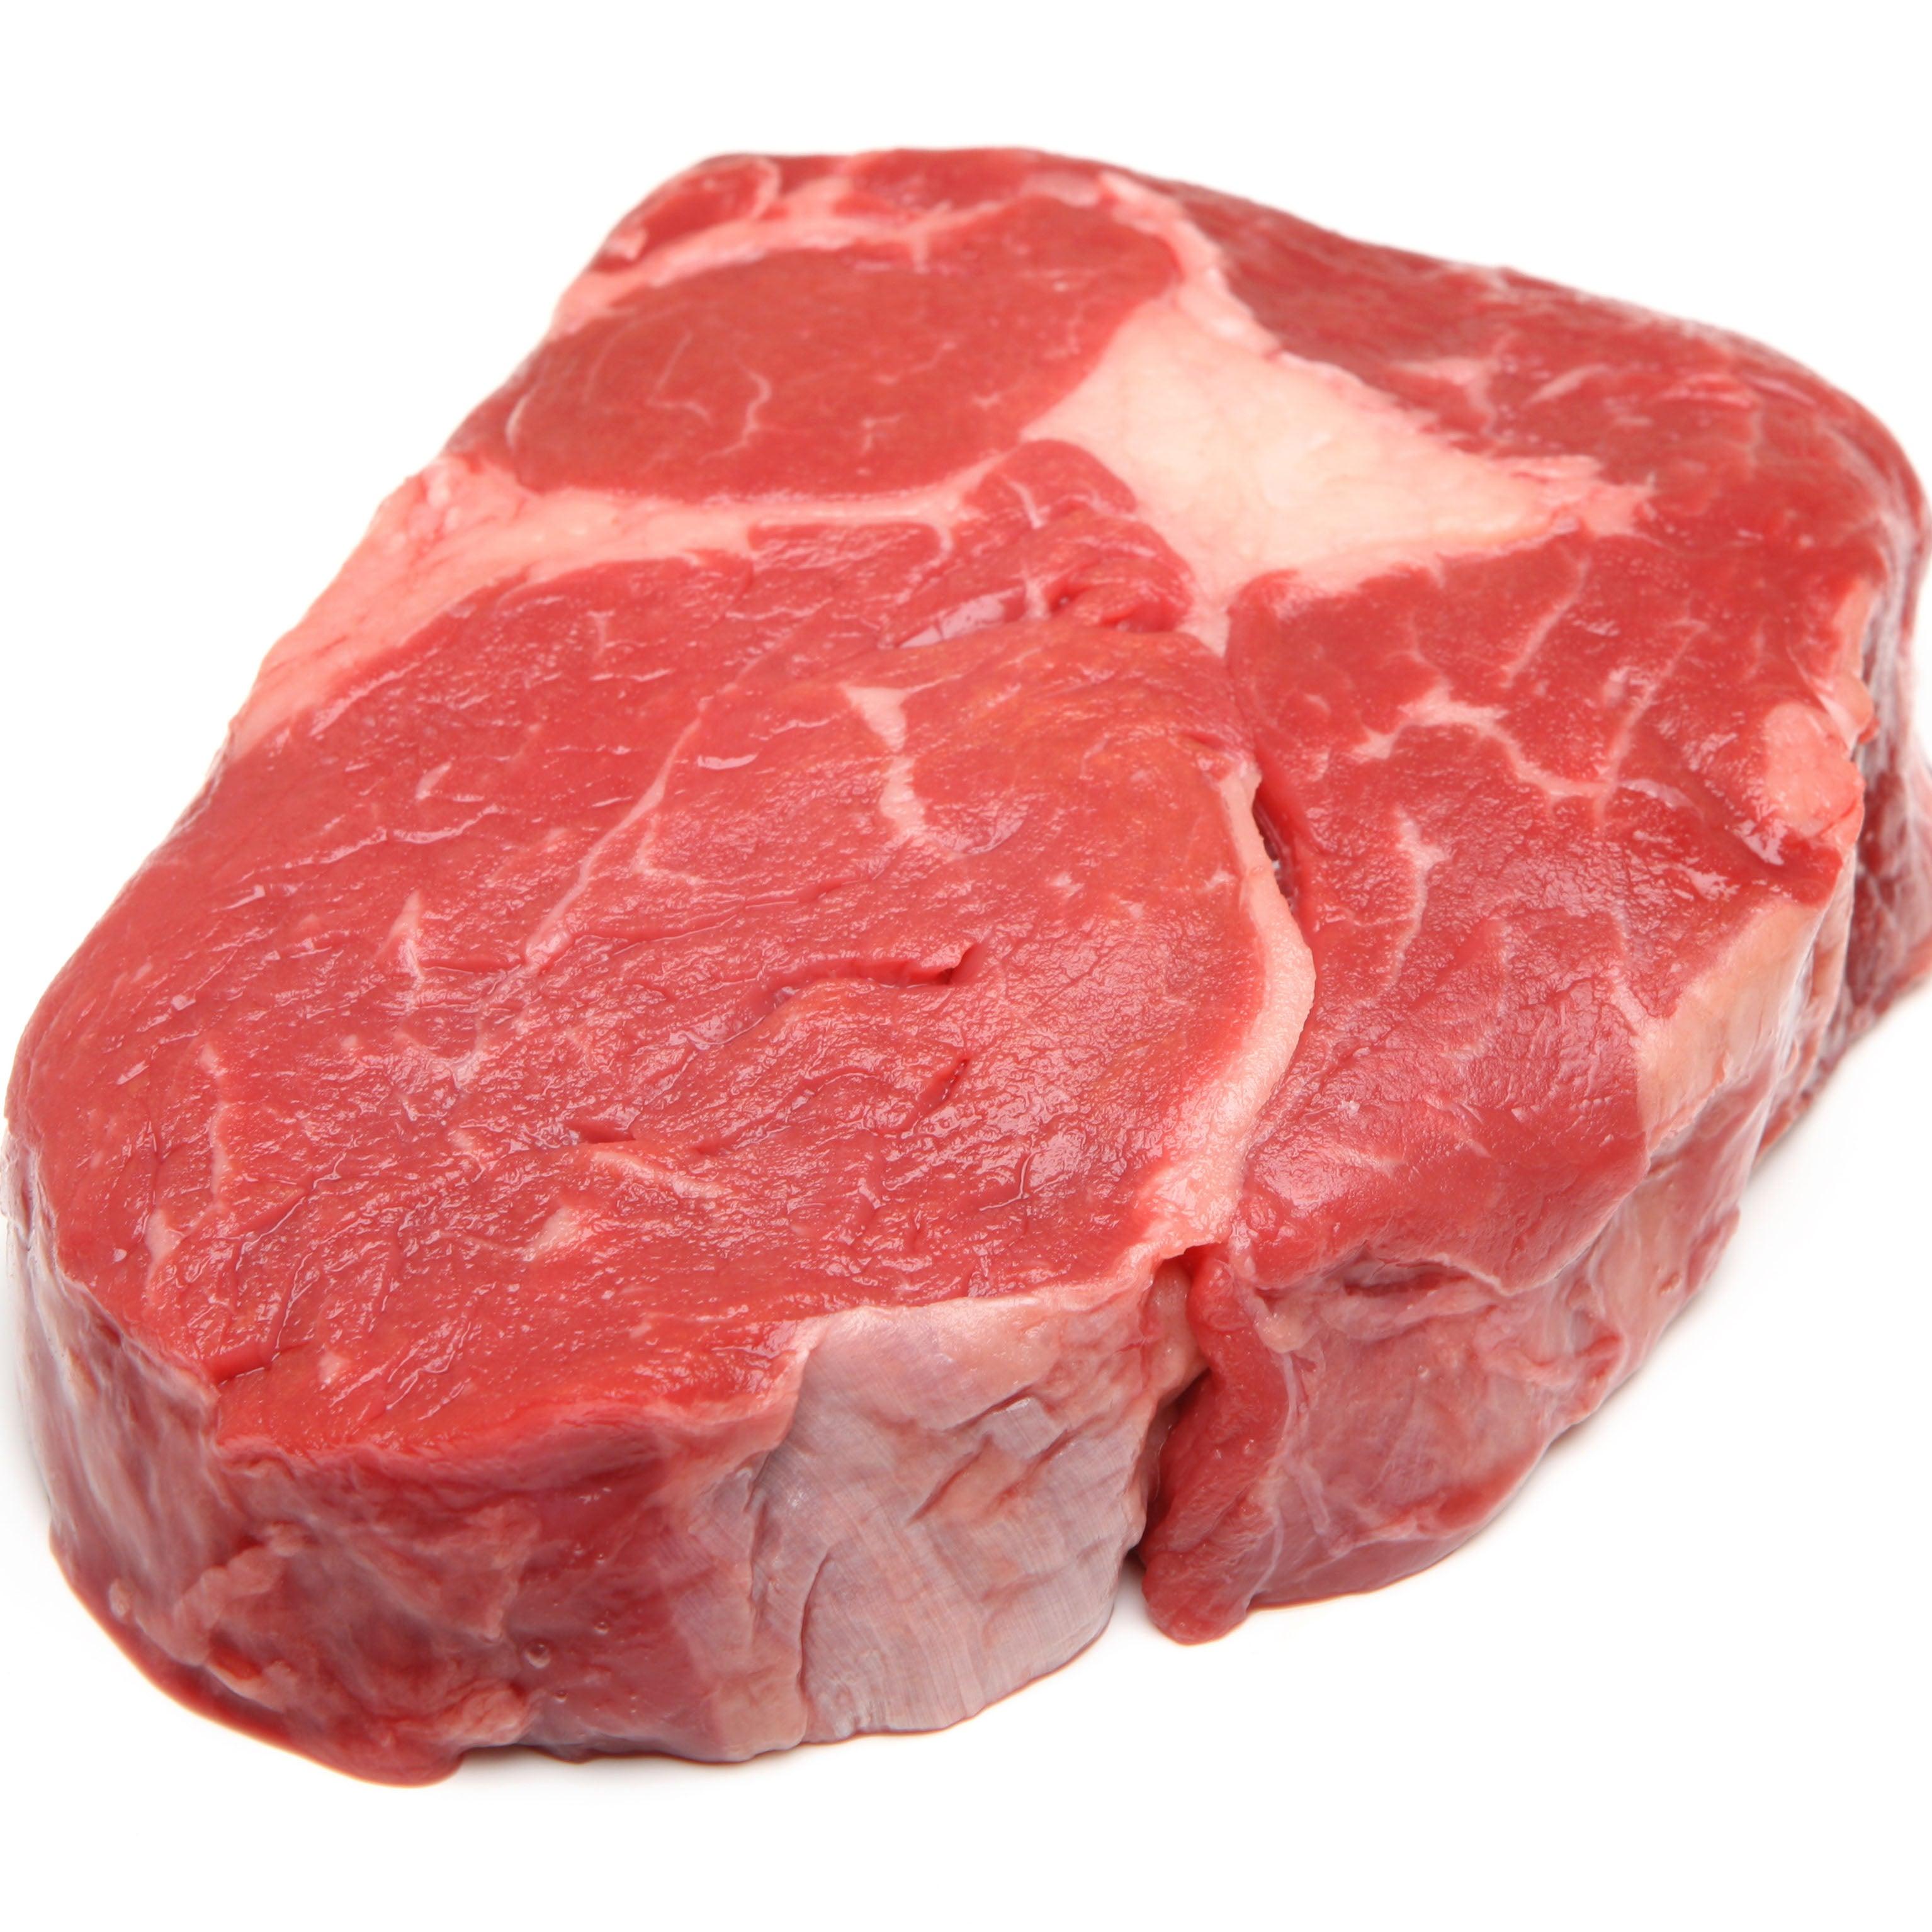 Grass Fed Beef Rib Eye Steak Boneless Thick Farmfoods 